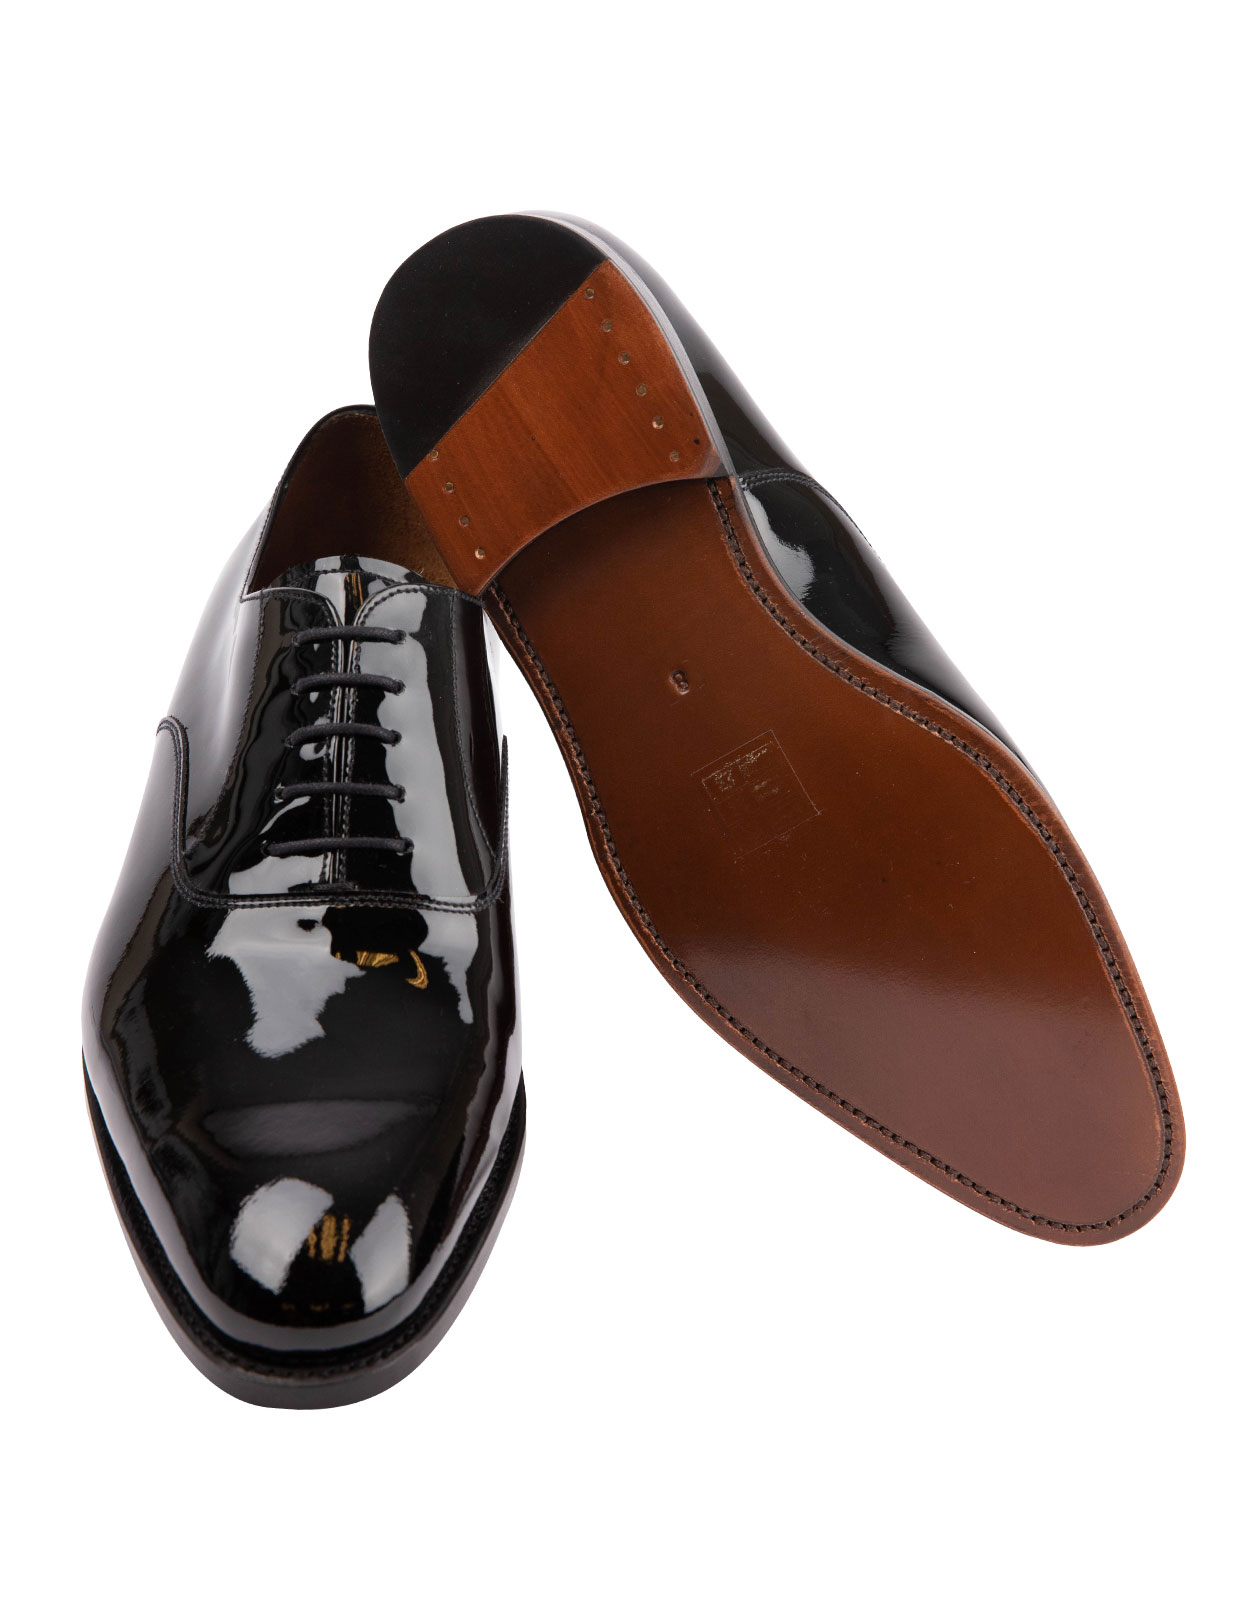 Patent Leather Oxford Shoe Black Stl 6.5